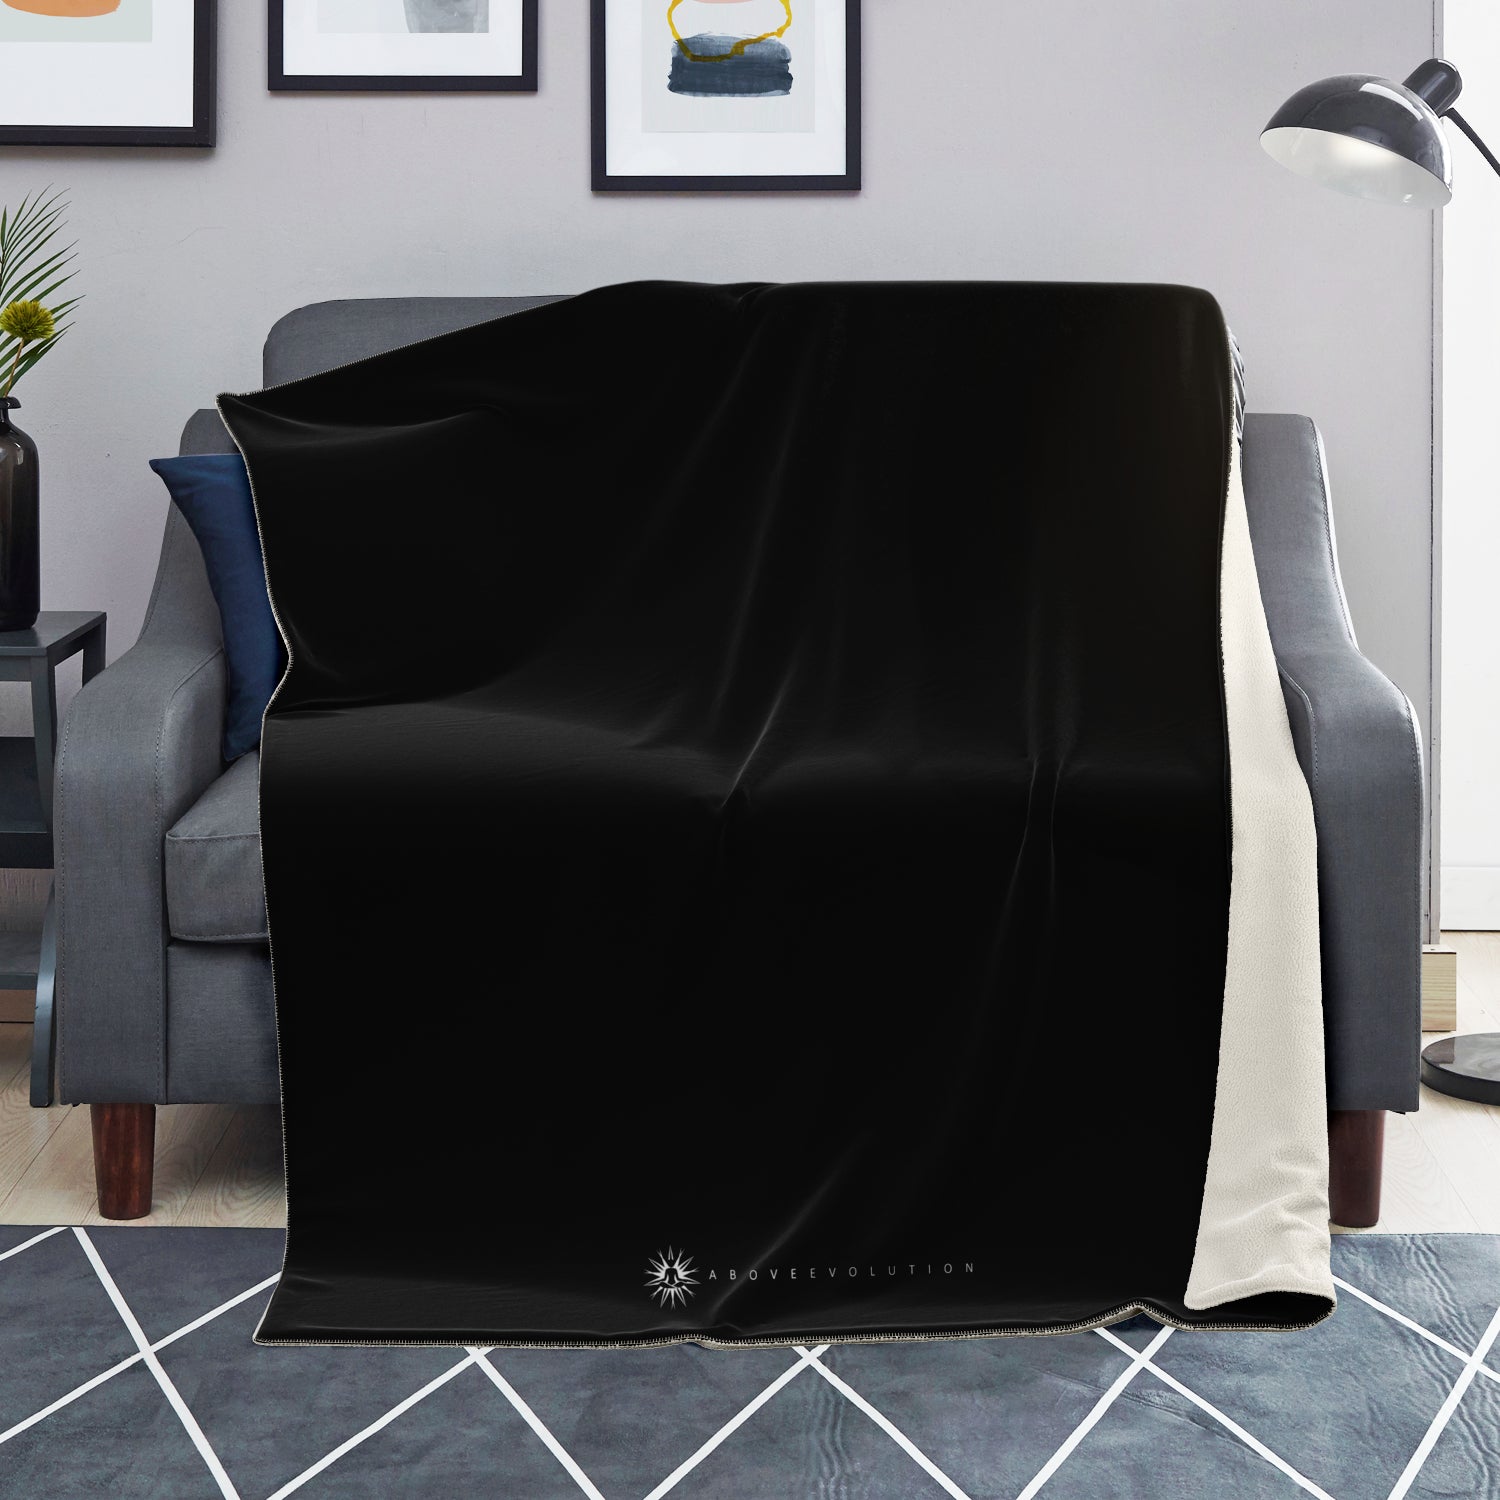 SADA Supersoft Microfleece Blanket - Black